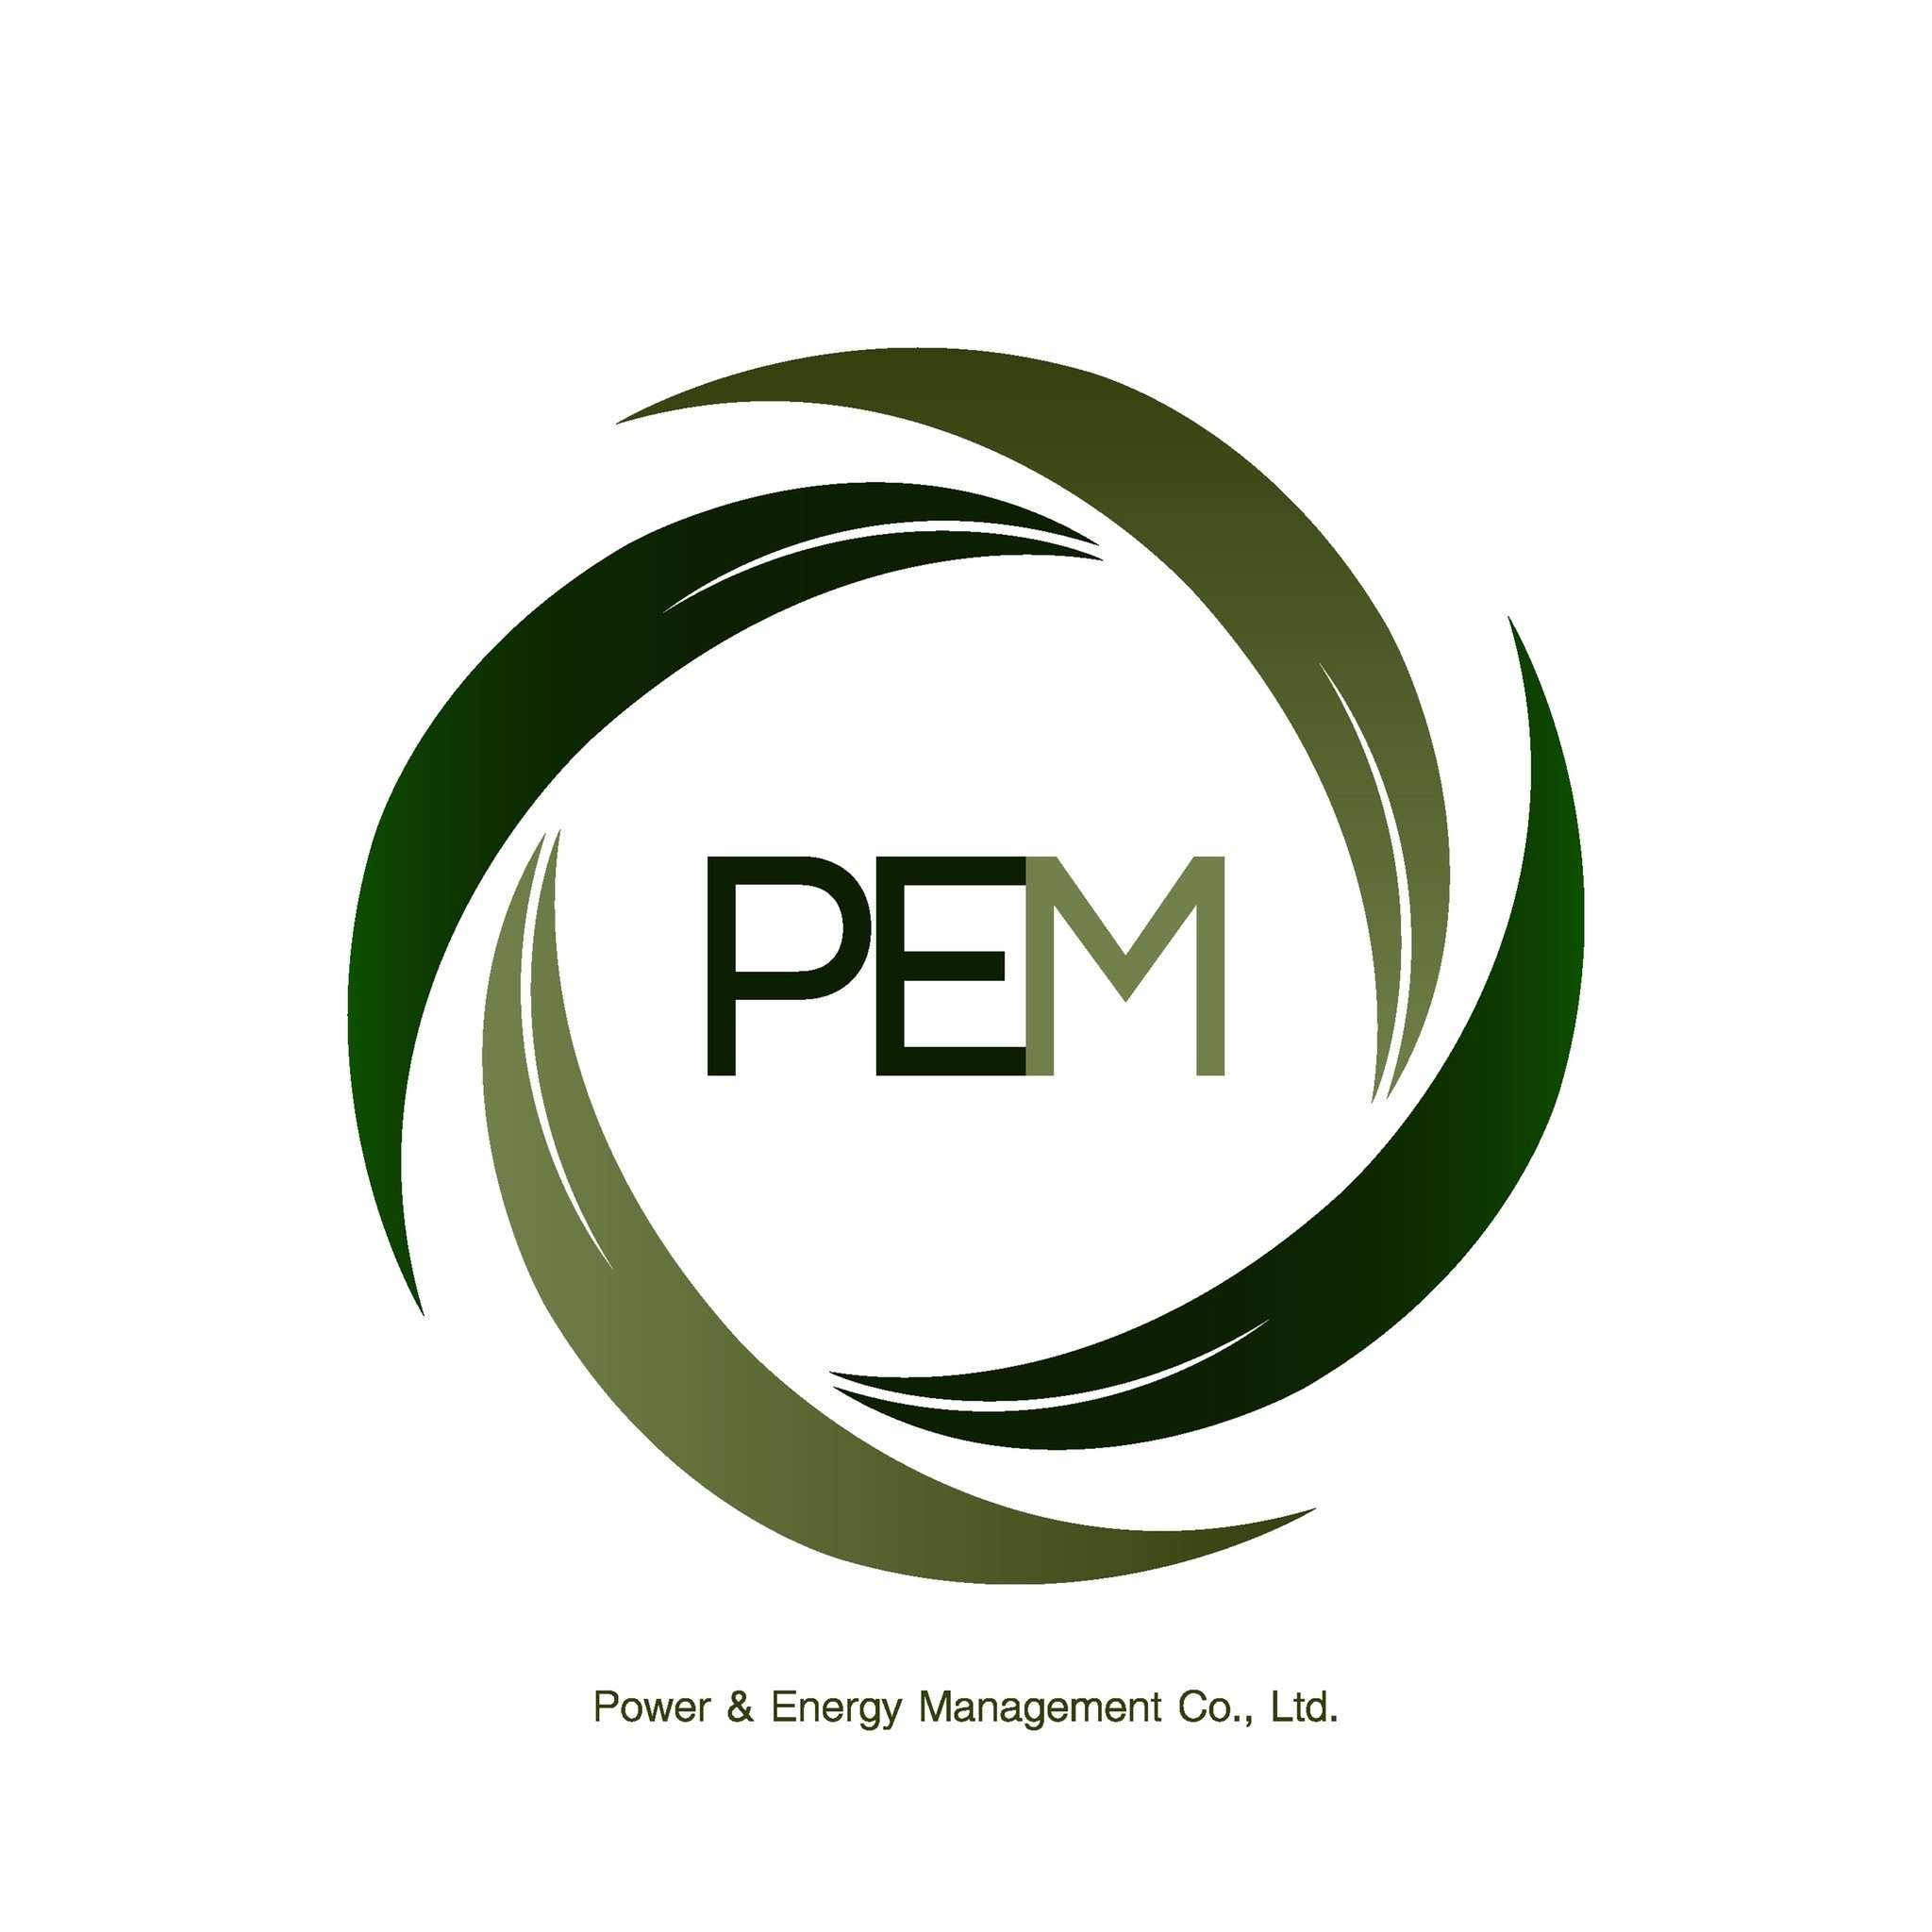 Power and energy management co.,ltd. logo โลโก้